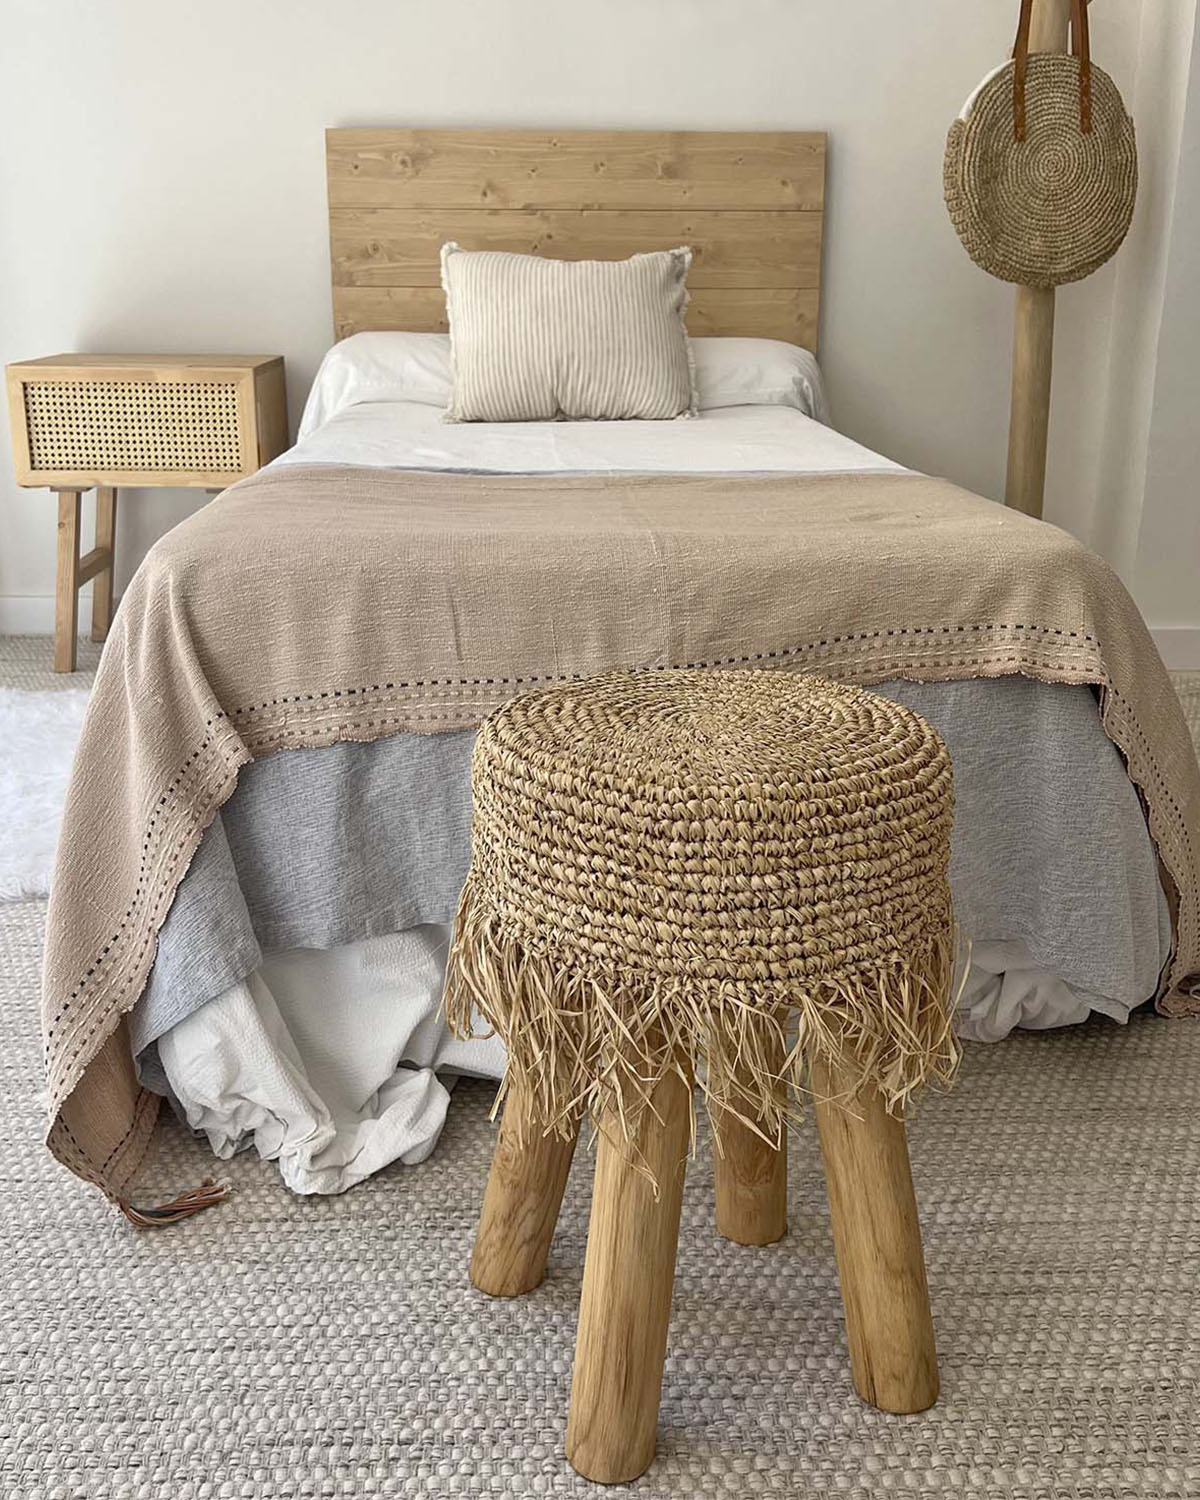  Felenny Taburete de bambú totalmente montado de madera para  spa, taburete bajo de bambú para cocina, dormitorio, sala de estar, baño (M)